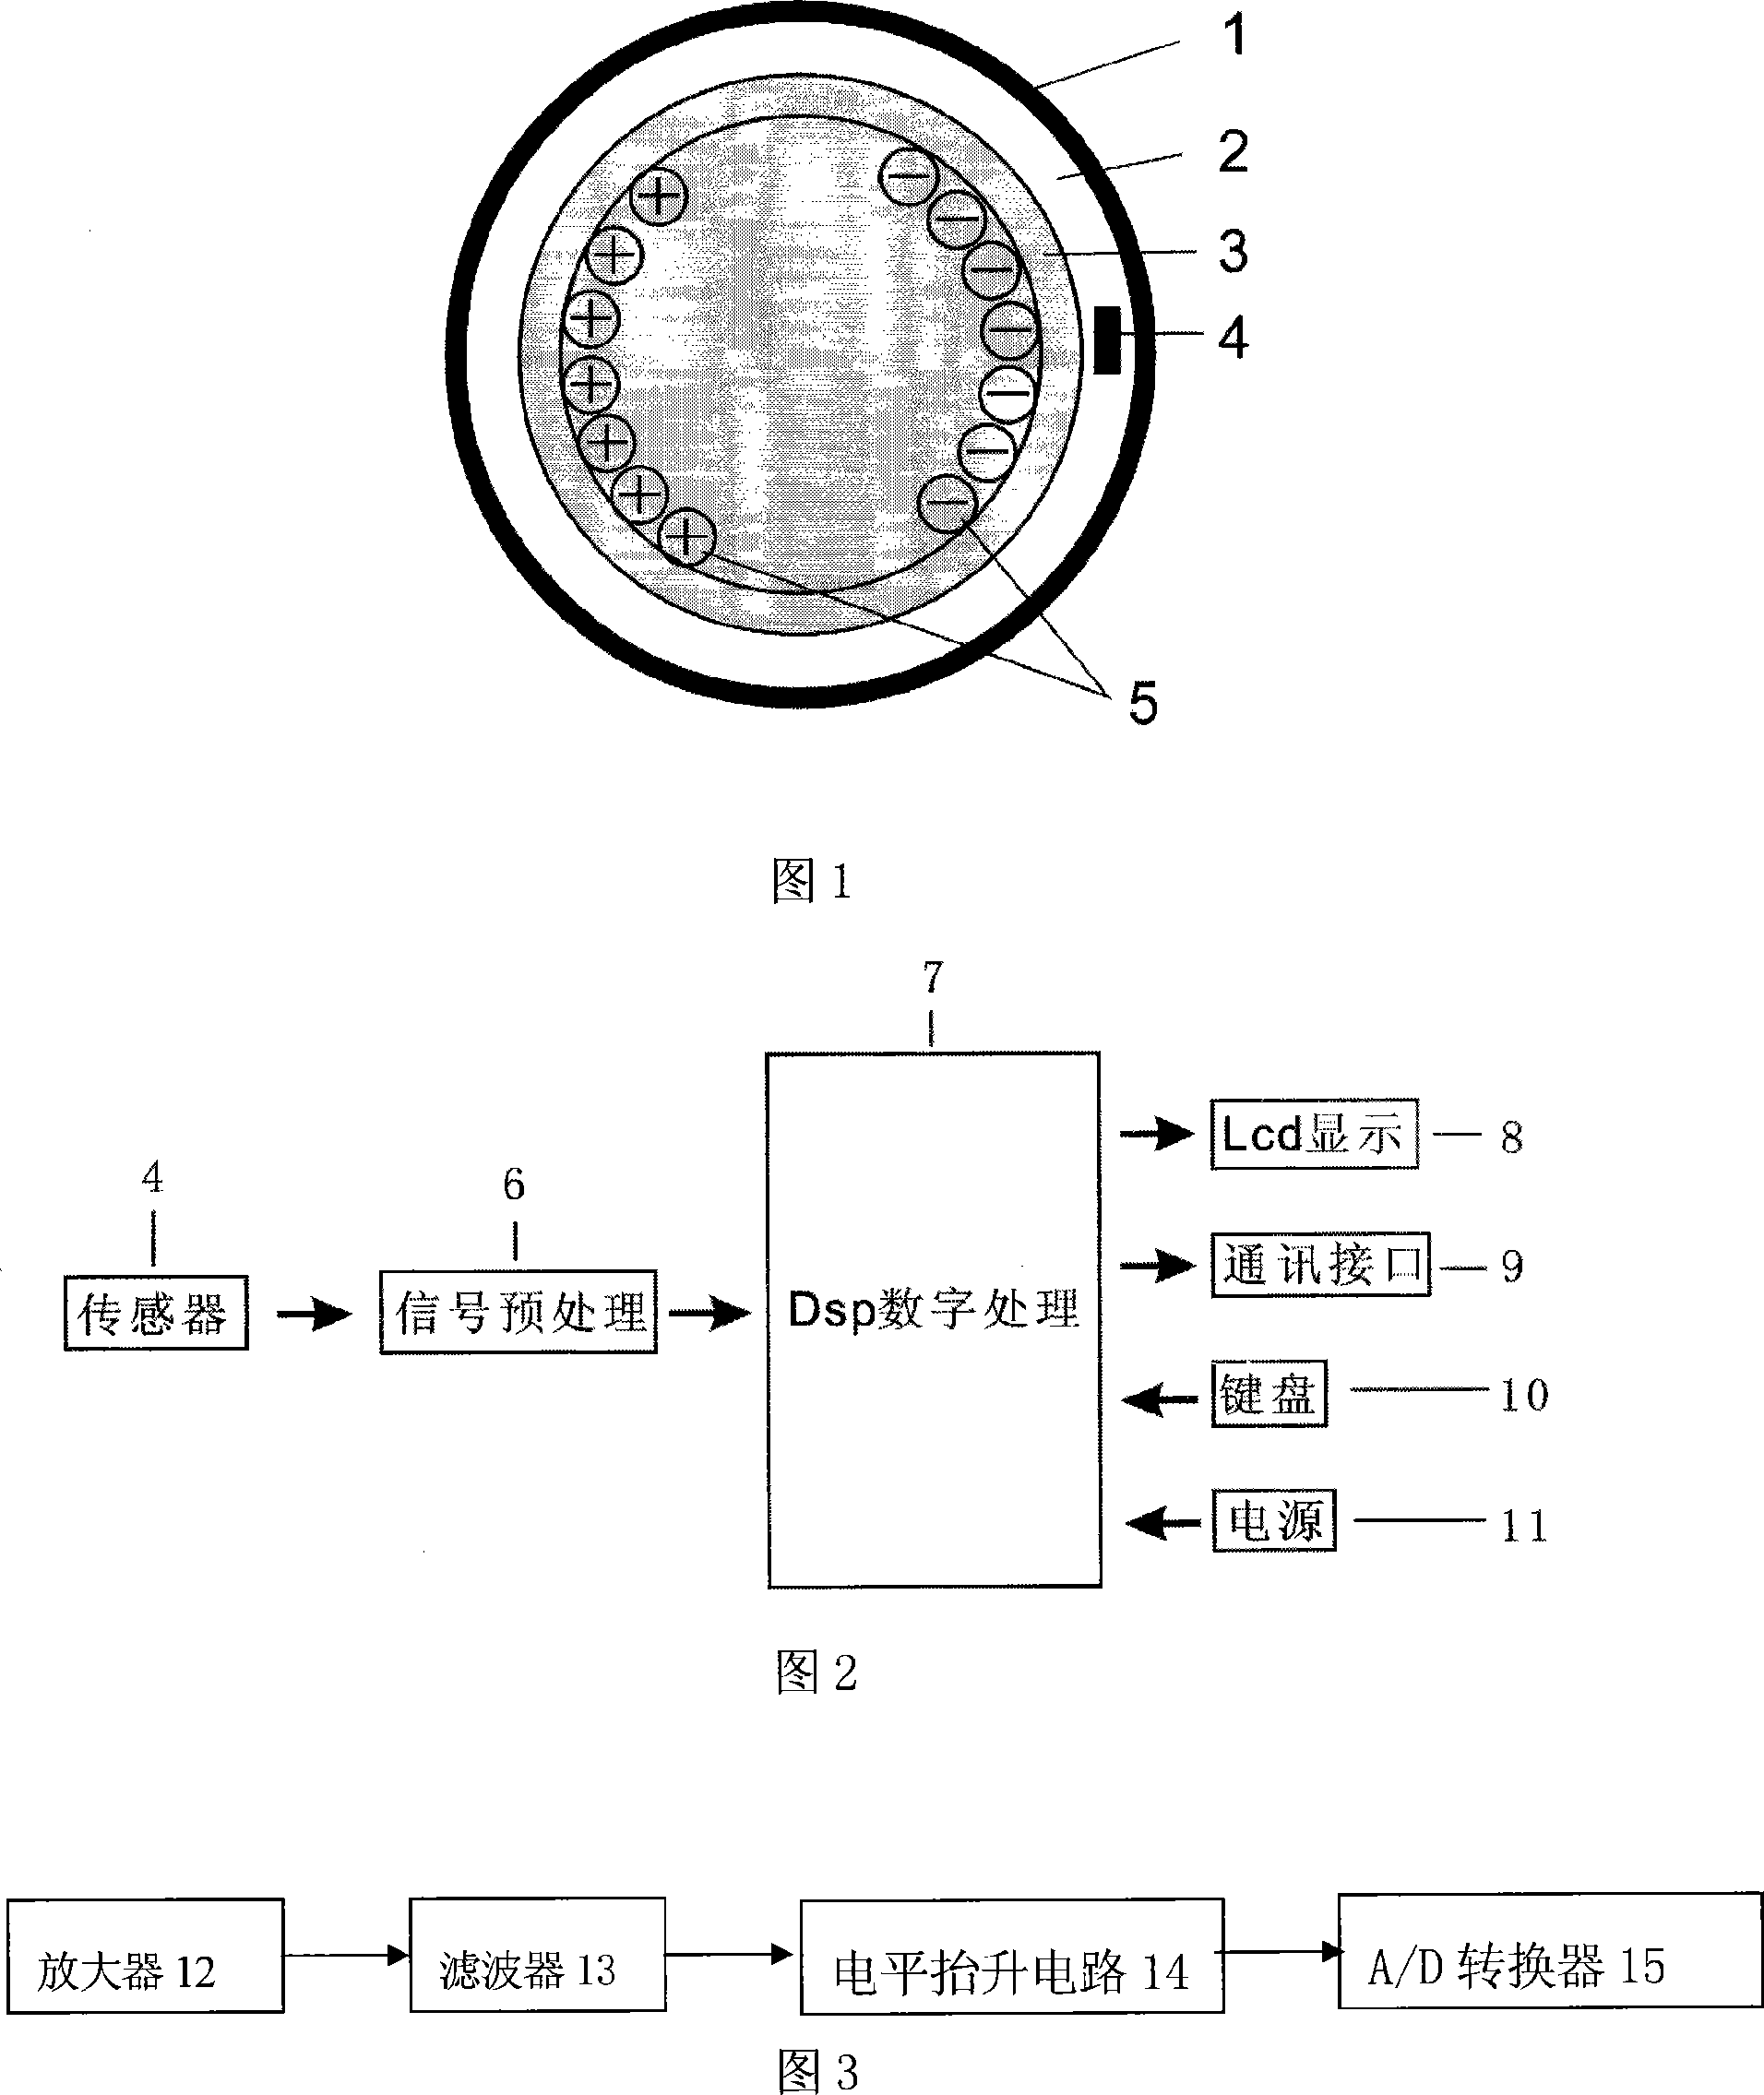 Generator rotor interturn short-circuit state detection device